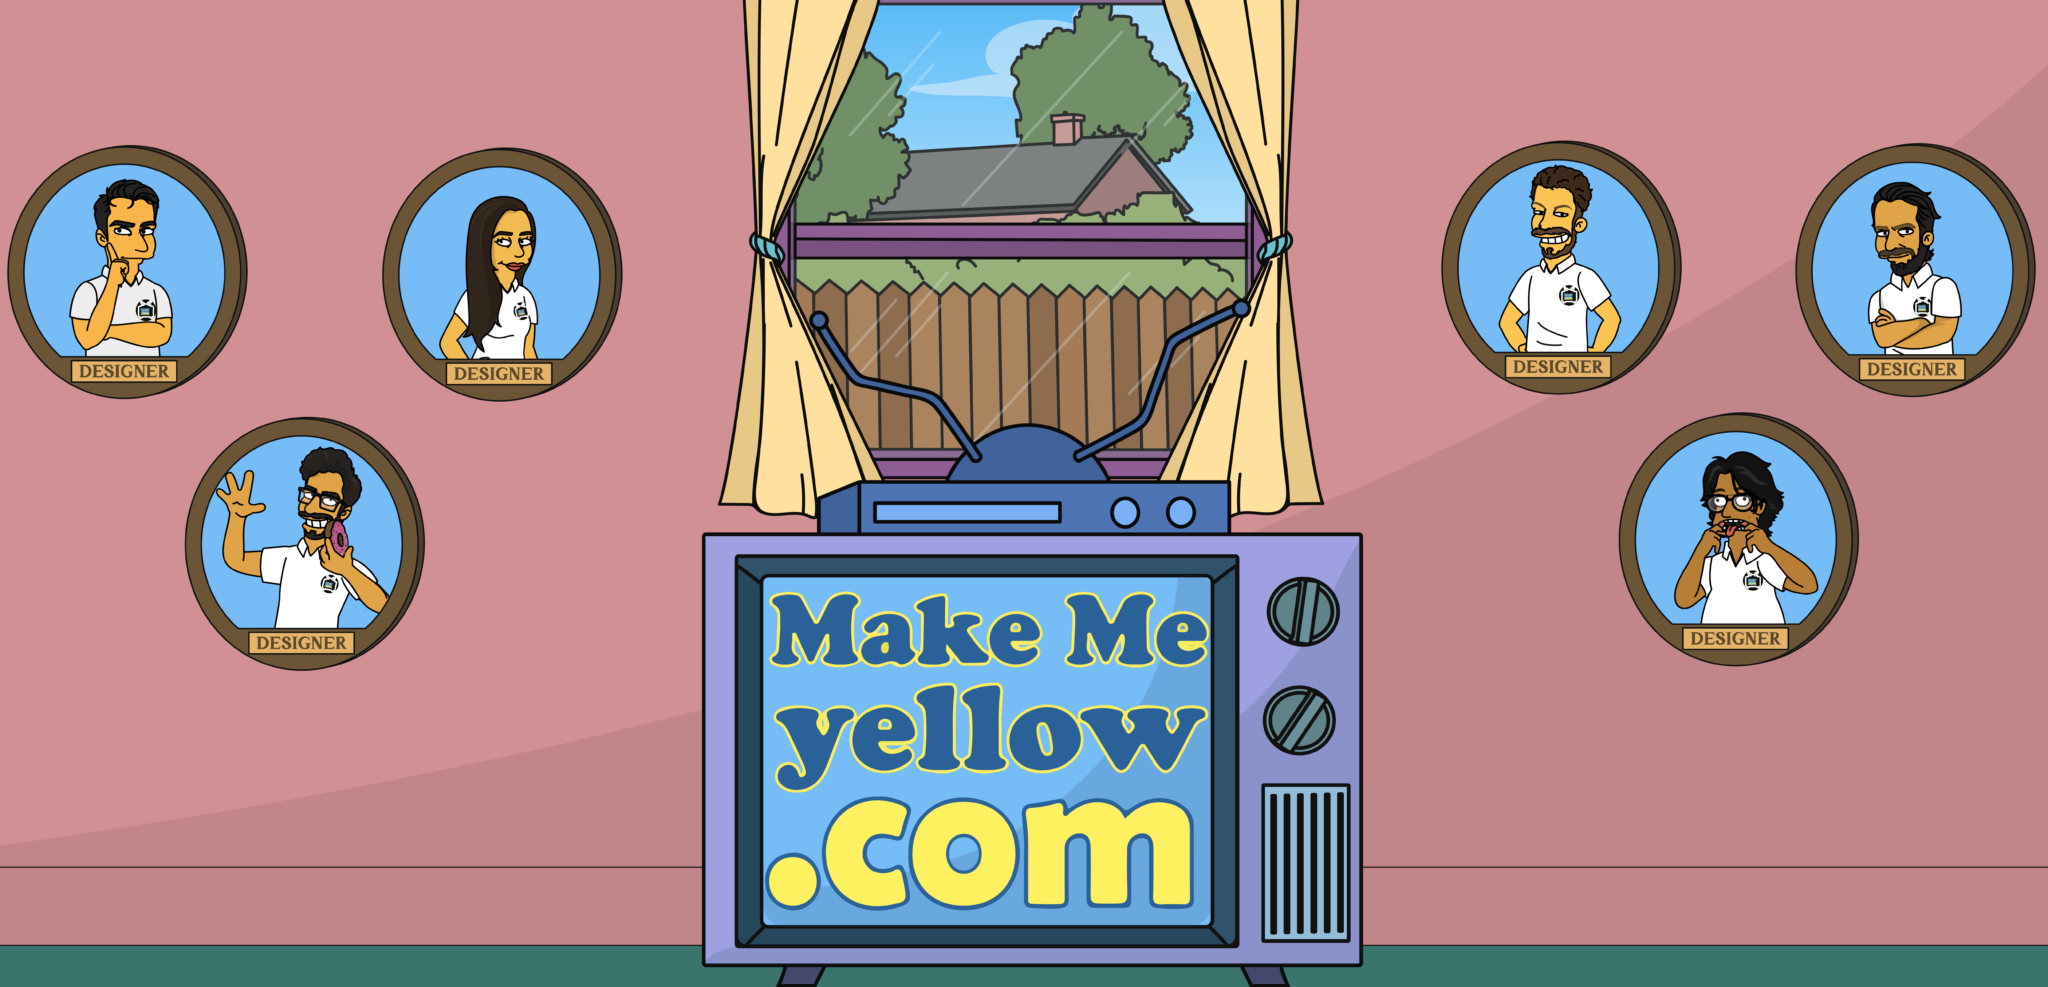 BEST Simpsonizeme Service in 2023 ⭐️ Make Me Yellow .COM